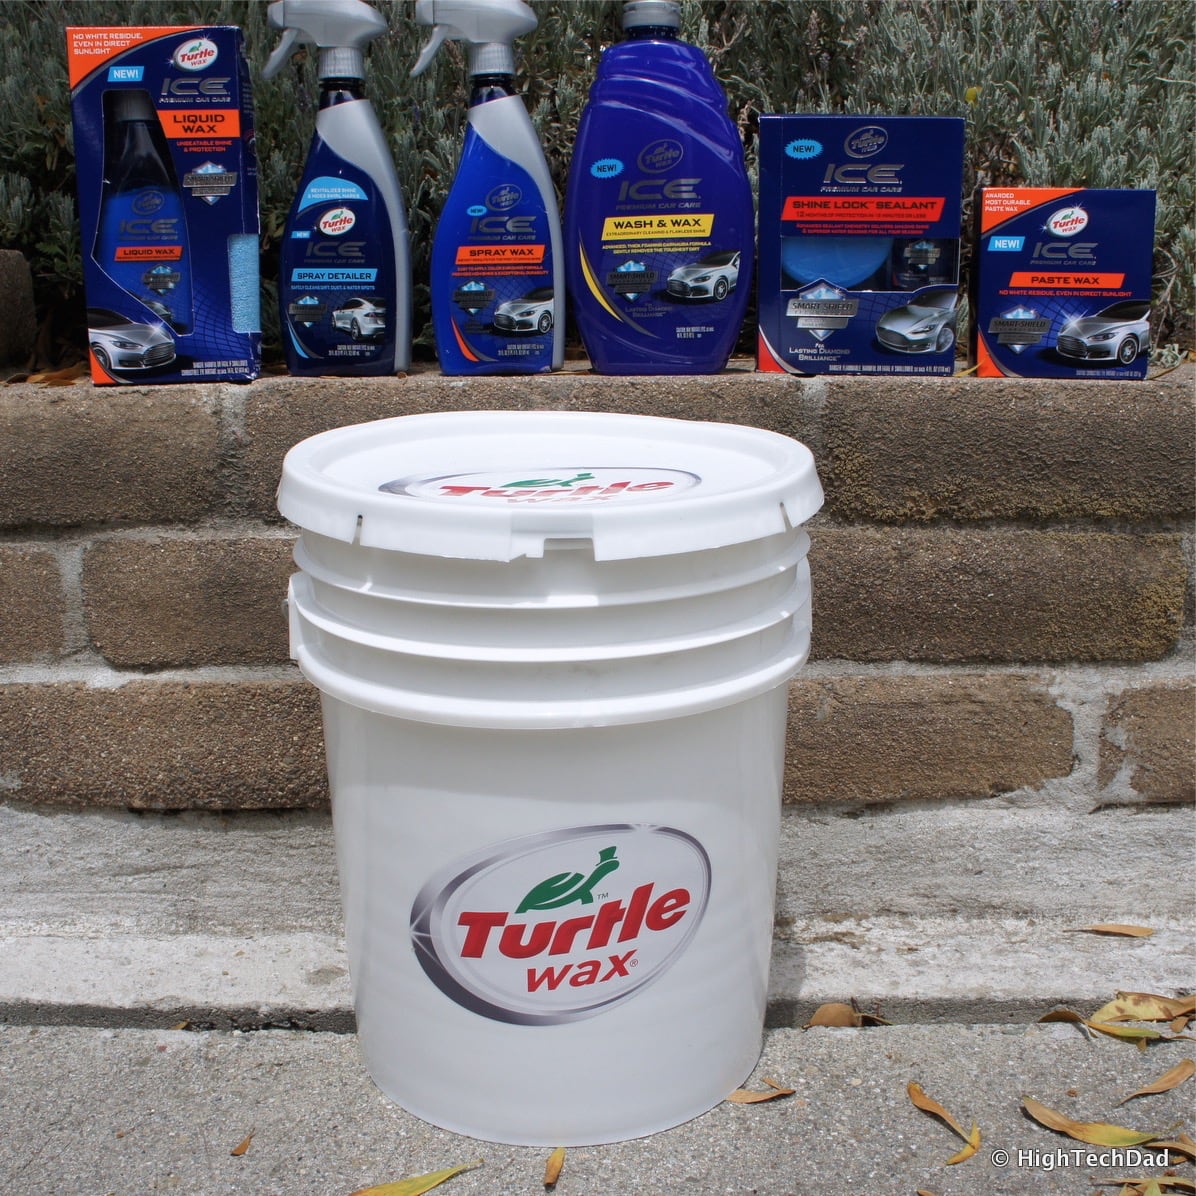 Turtle Wax ICE Spray Wax & ICE Spray Detailer 2015 - Review 